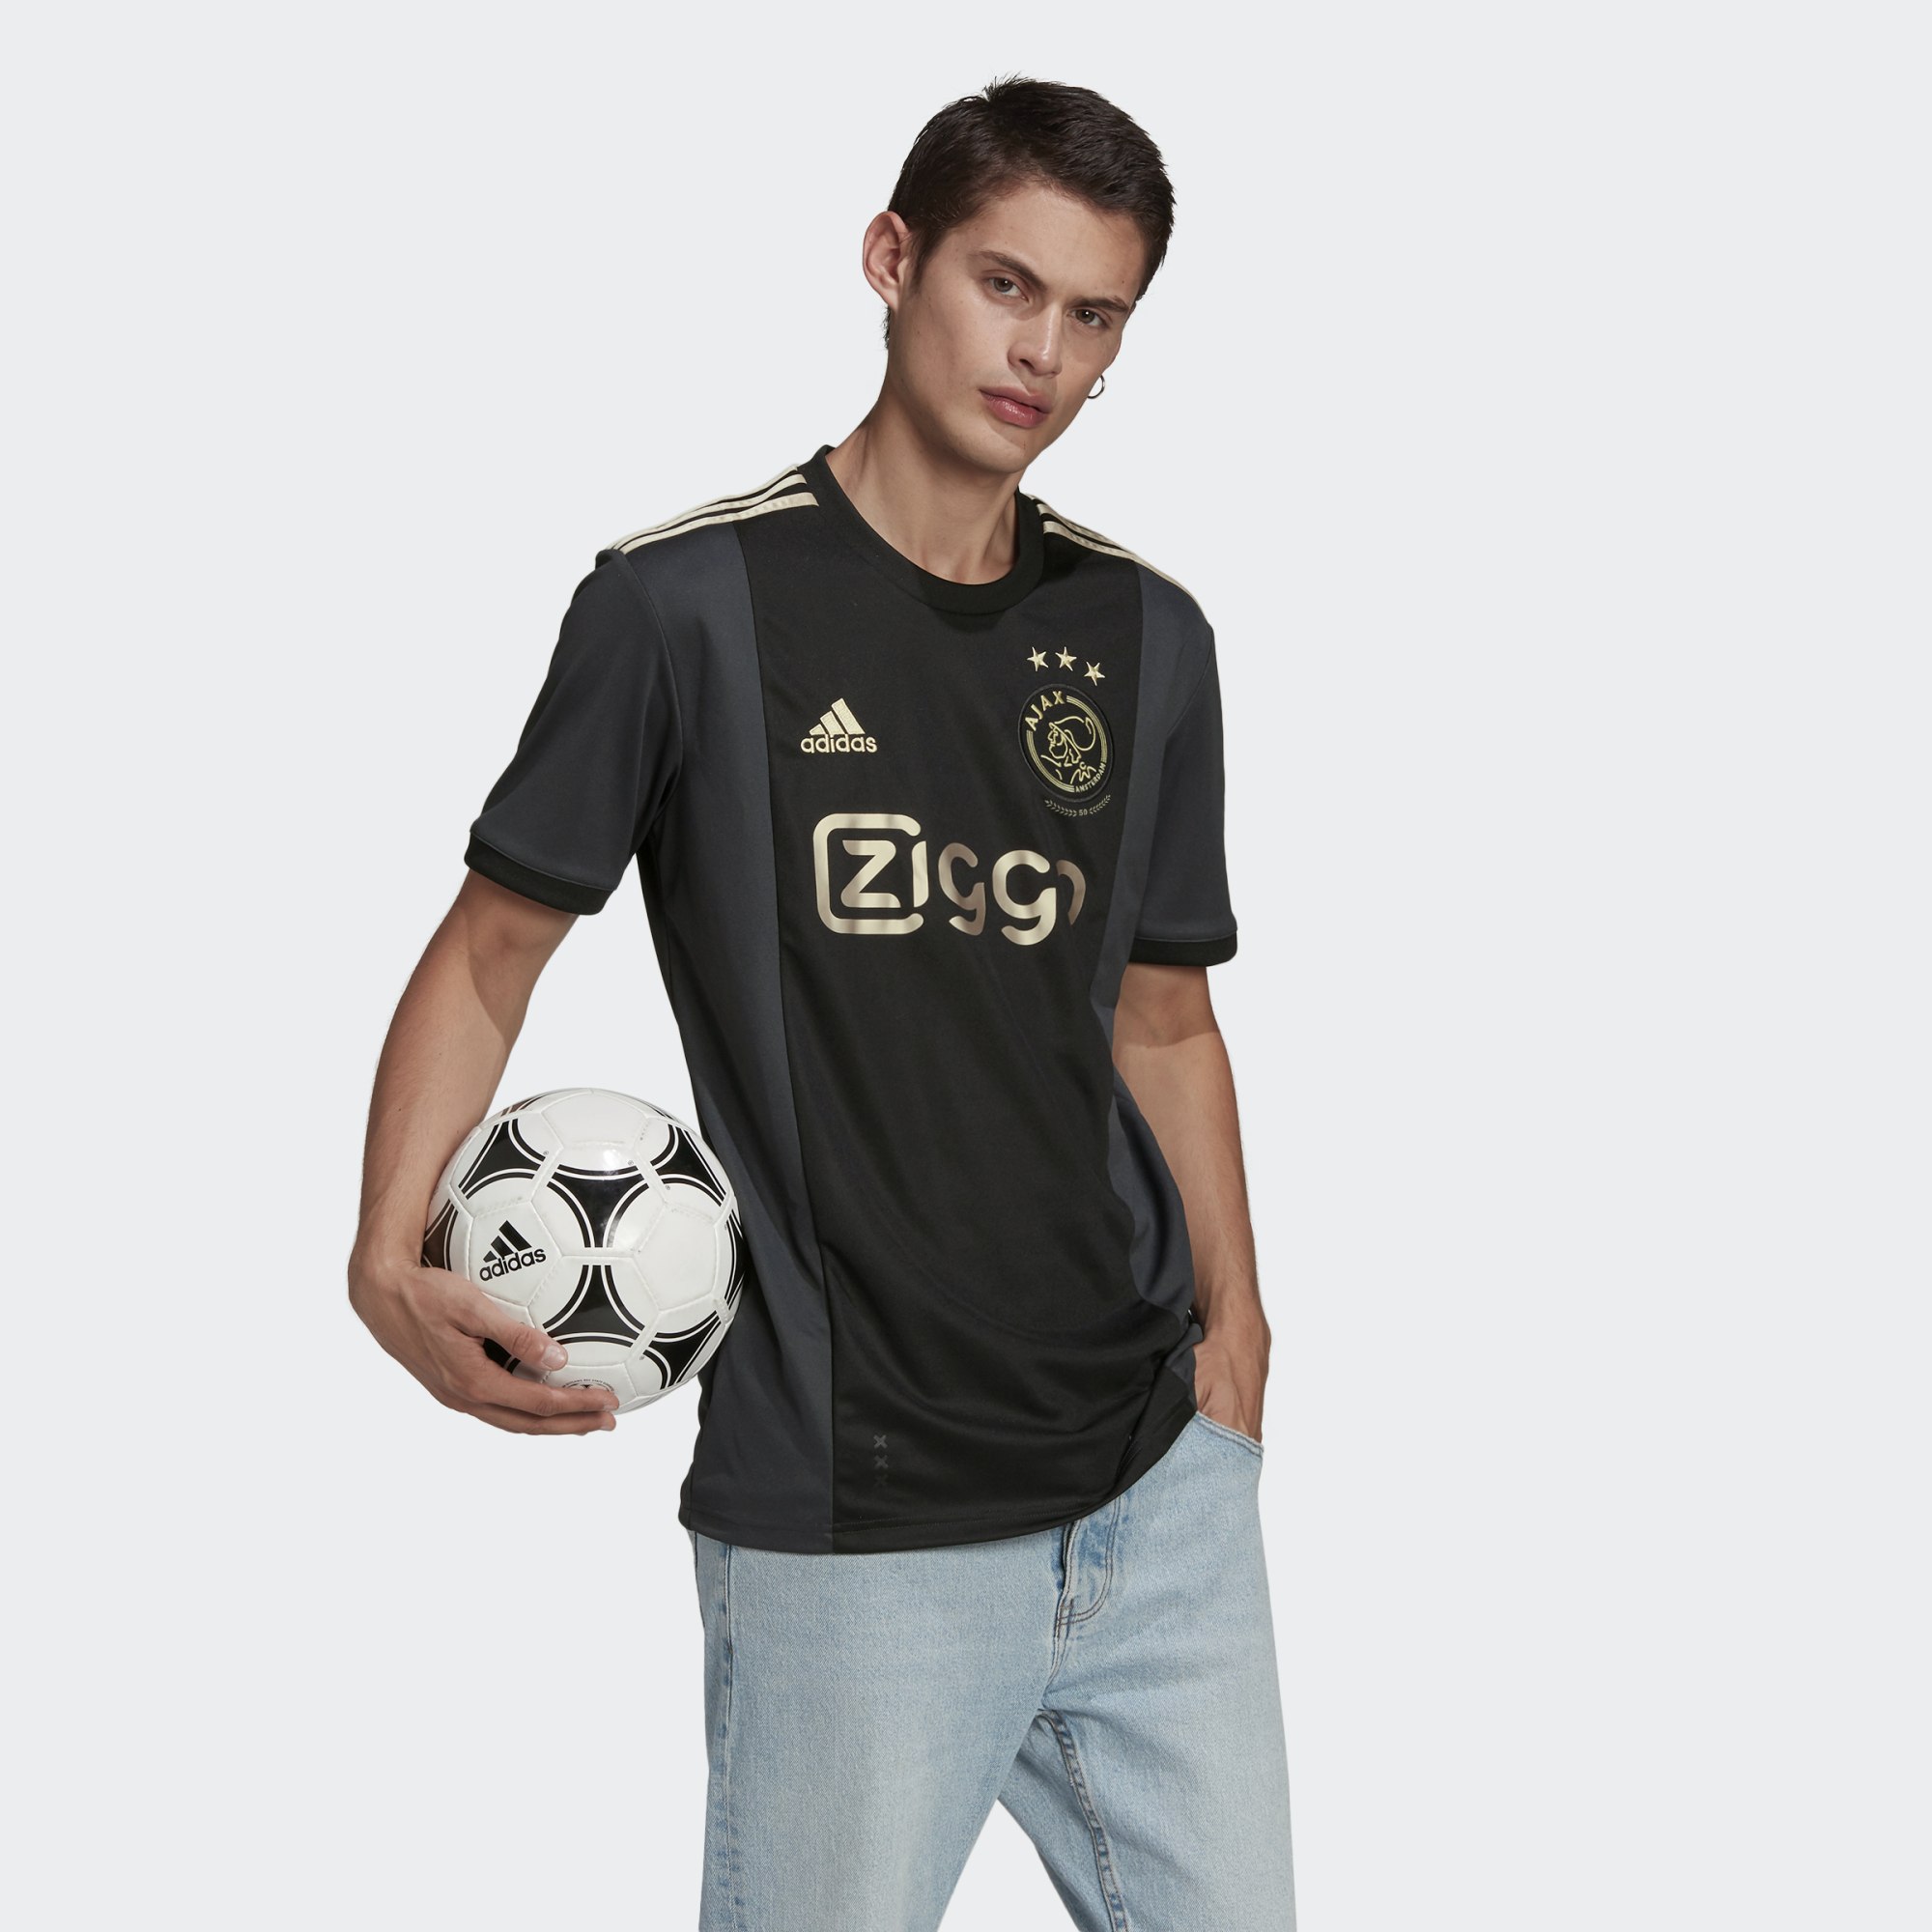 Ajax 2020-21 Adidas Third Kit - 20/21 Kits - Football shirt blog